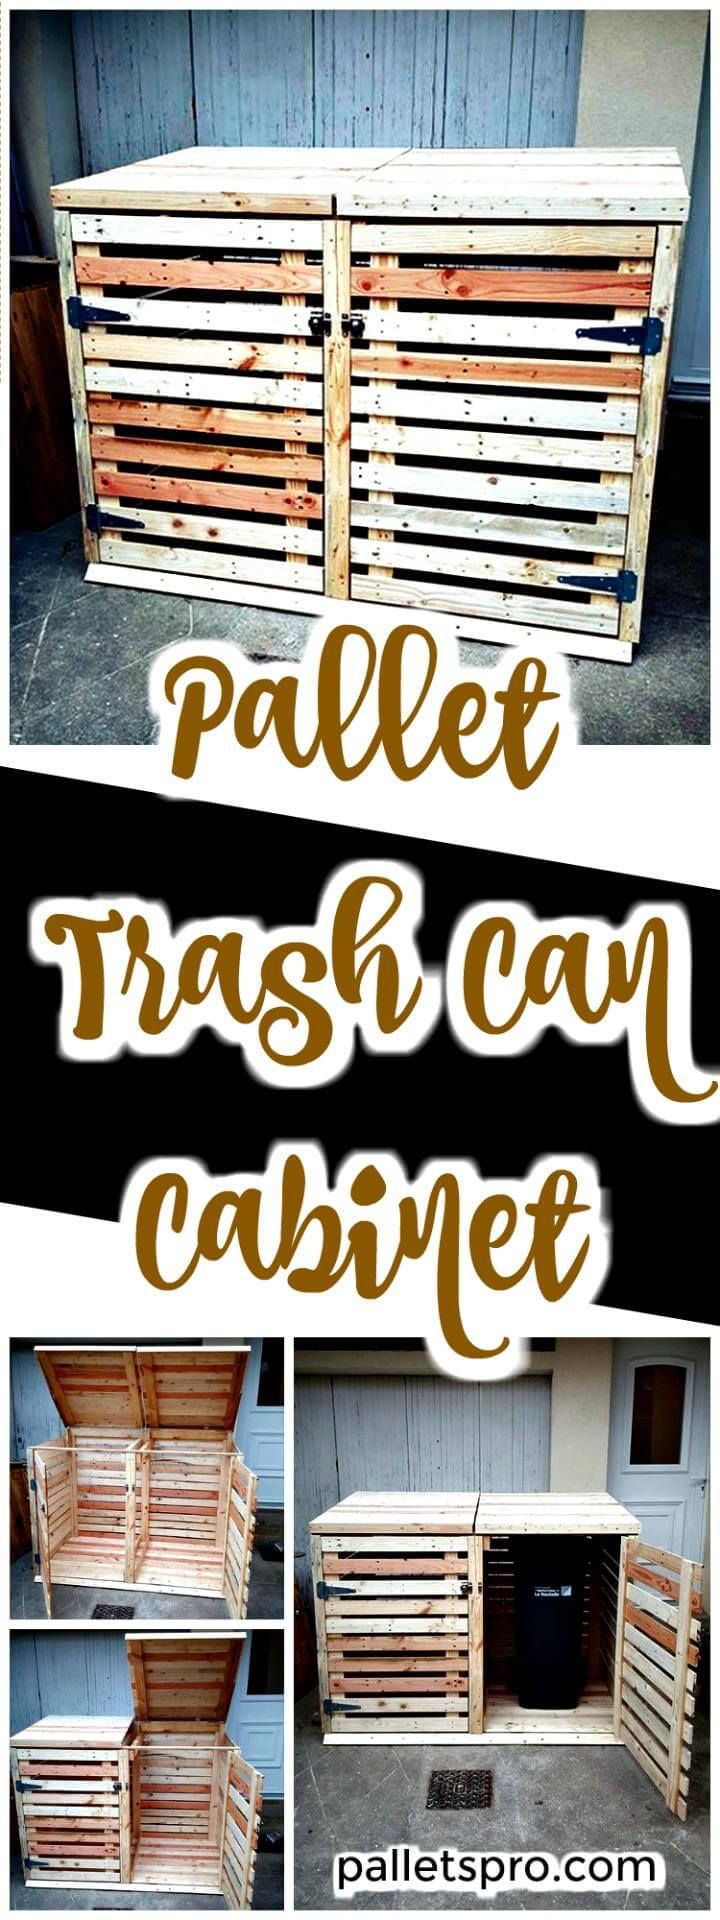 Pallet Trash Can Cabinet